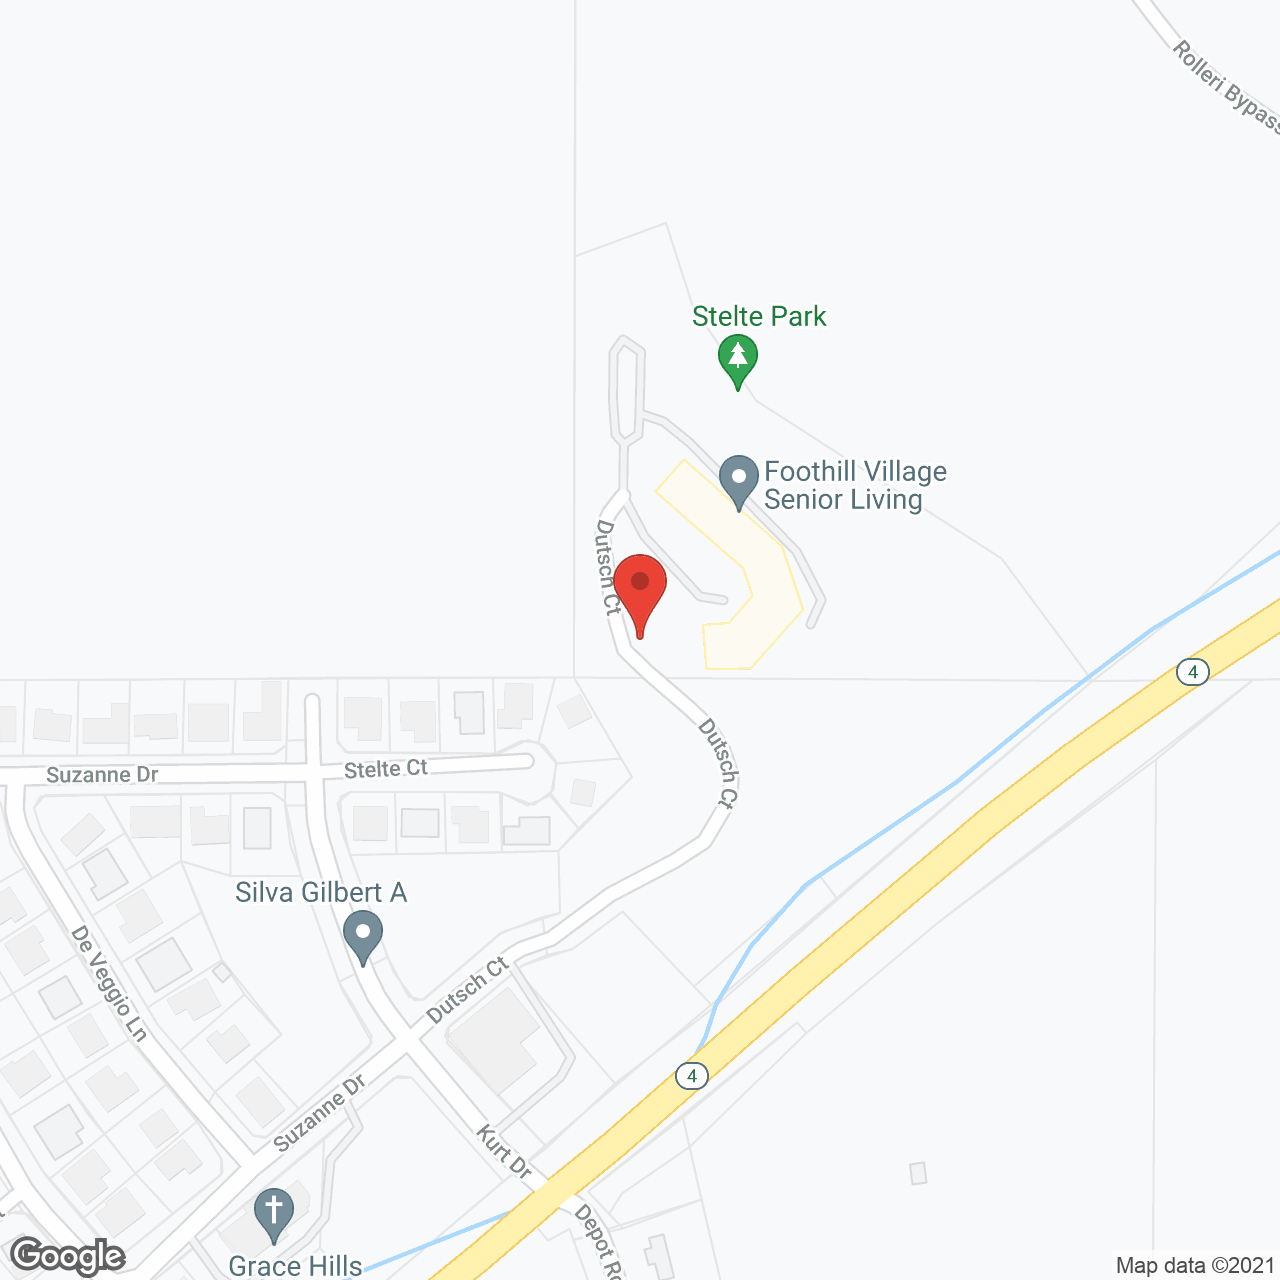 Foothill Village Senior Living Community in google map